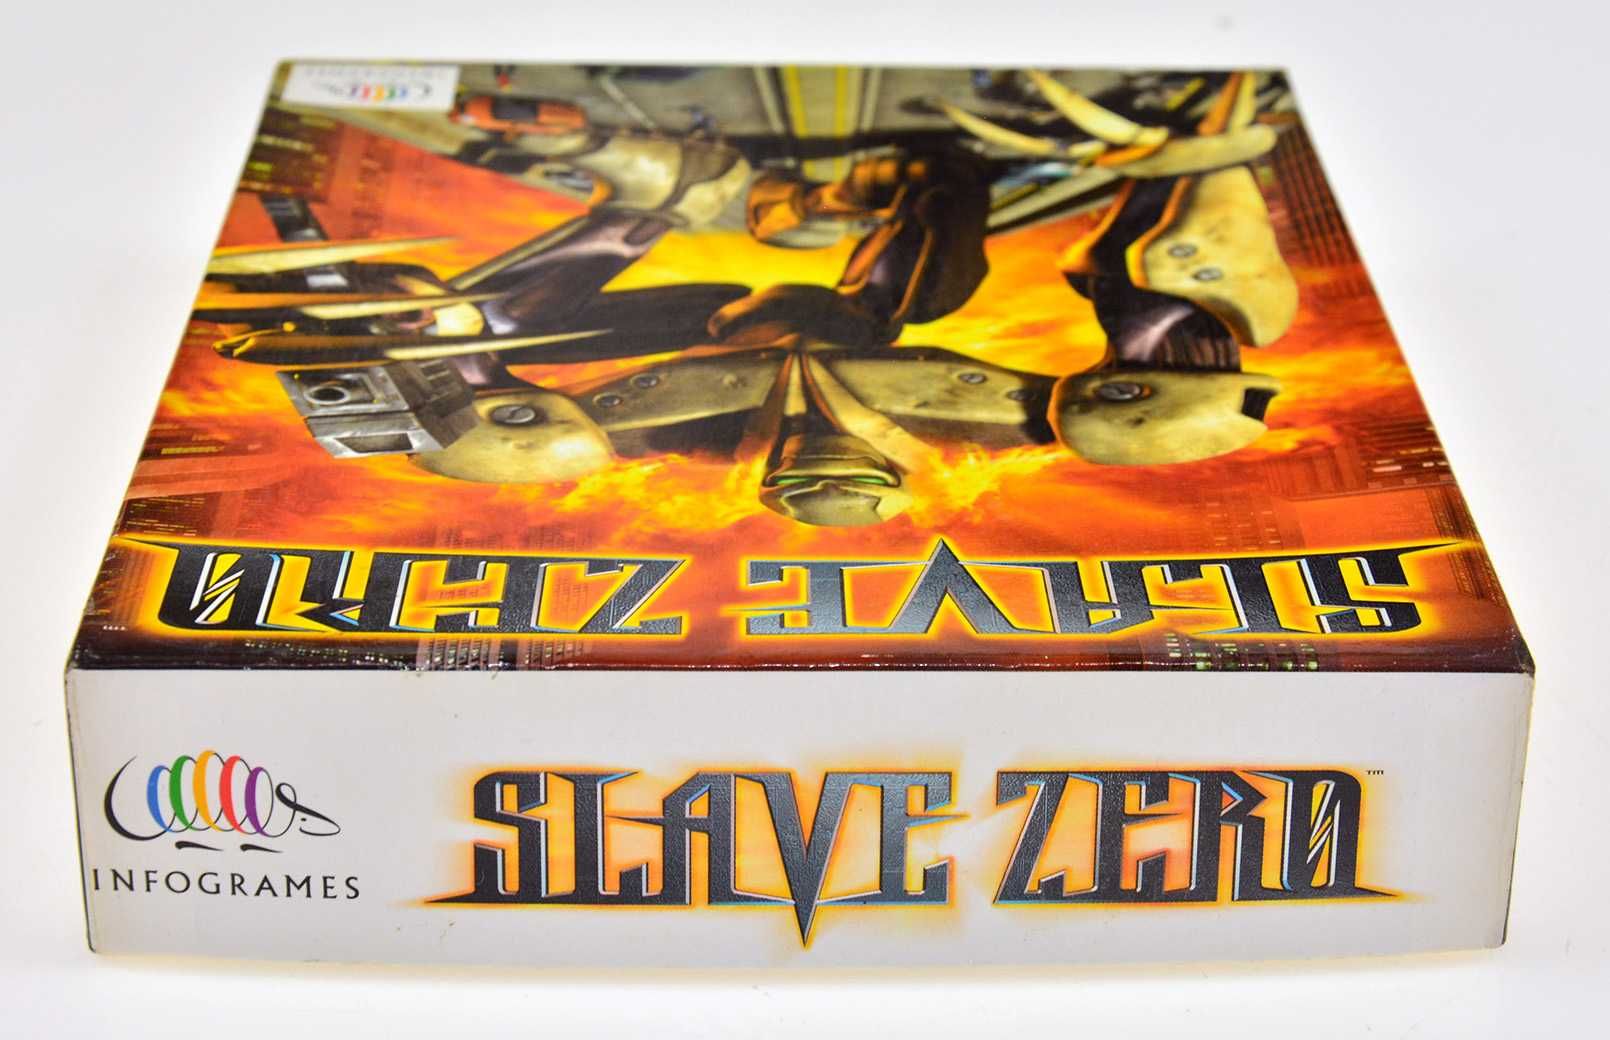 SLAVE ZERO - duży big box, Infogrames 1999, karton, 3Dfx PC, dreamcast